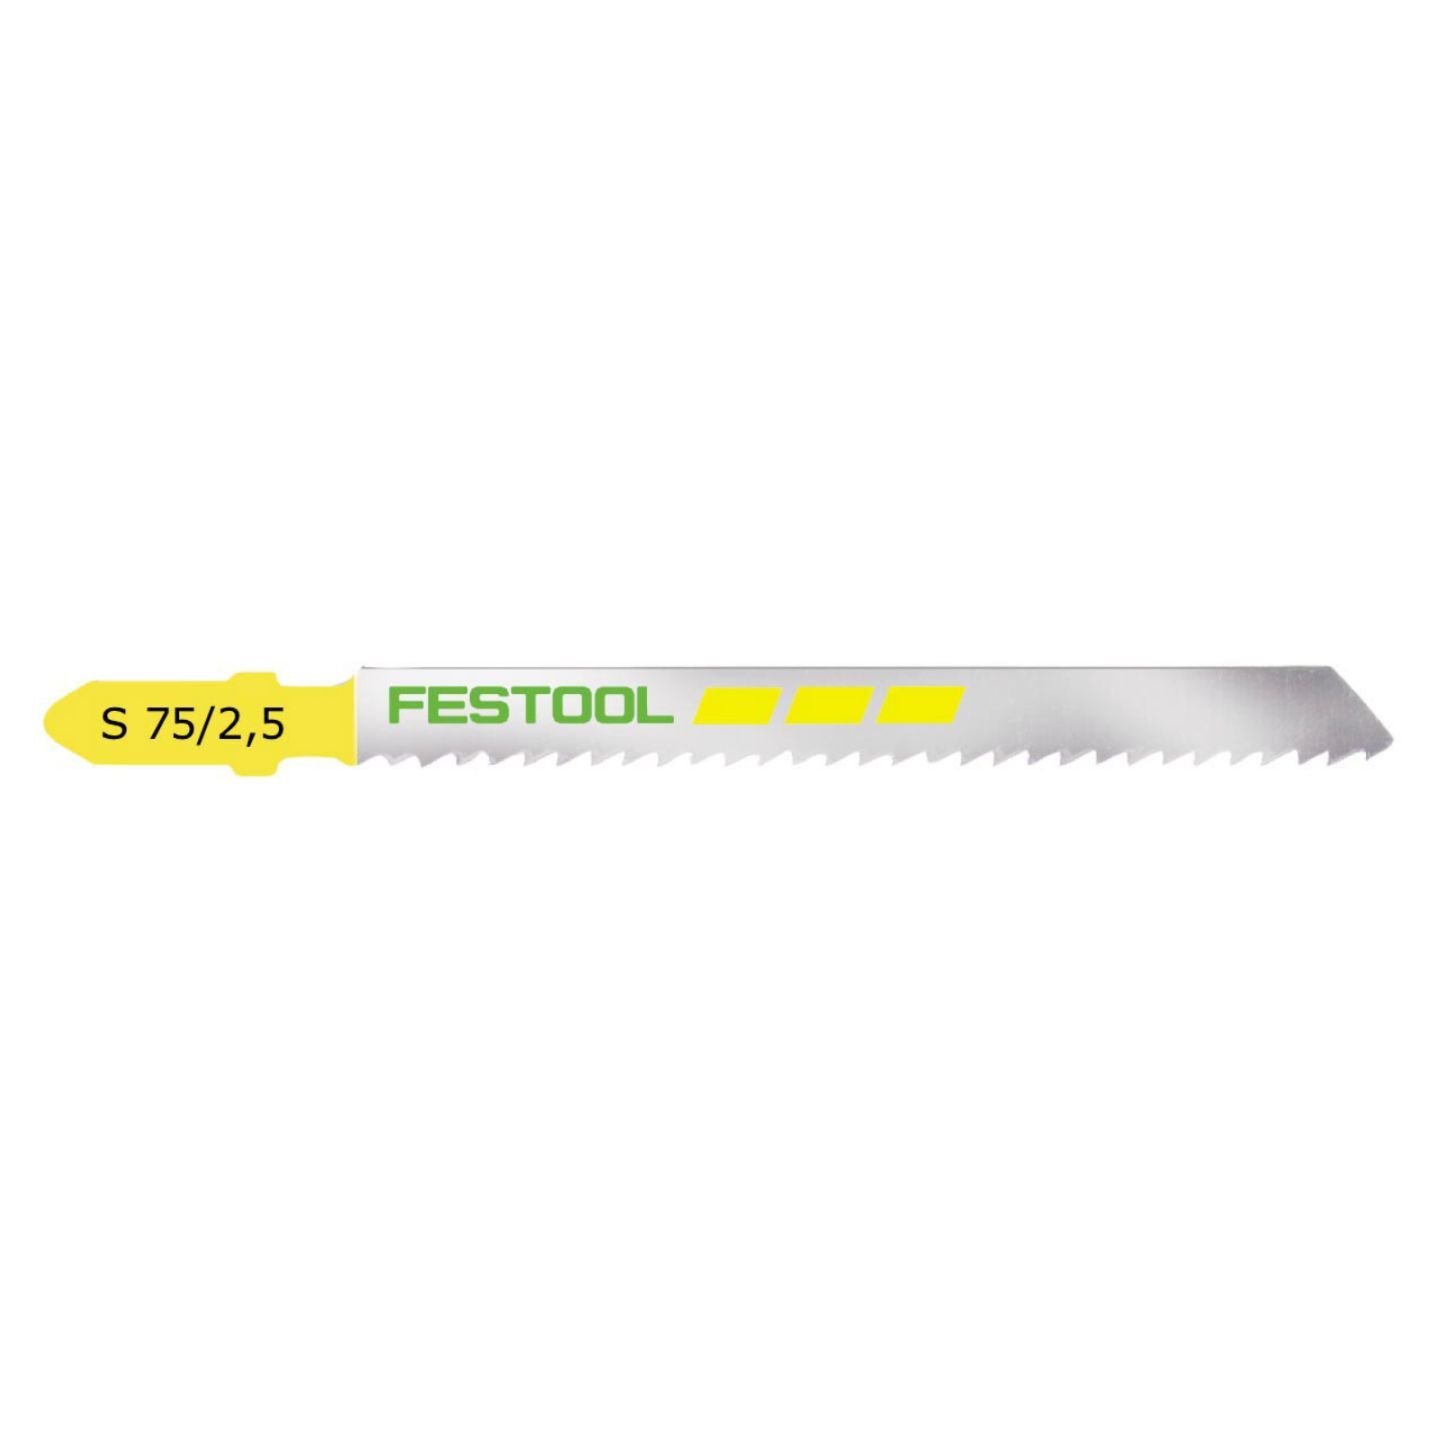 Festool S 75/2.5 25X Jigsaw Blade (486963)